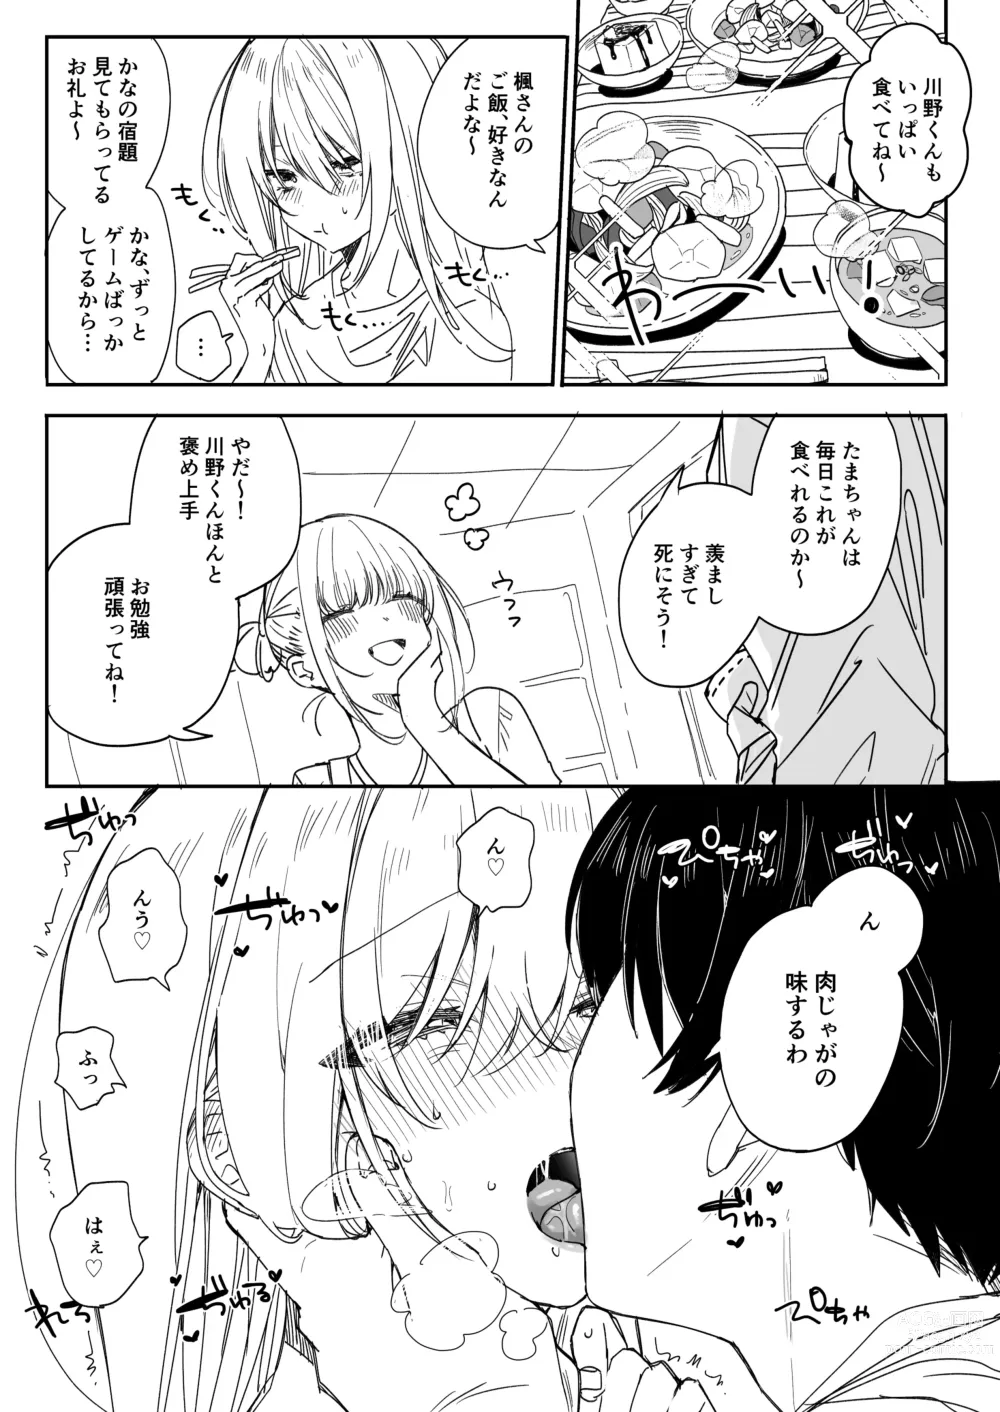 Page 18 of doujinshi 今年の夏休みはゲーマー幼馴染の家に入り浸ってエッチするので忙しいです